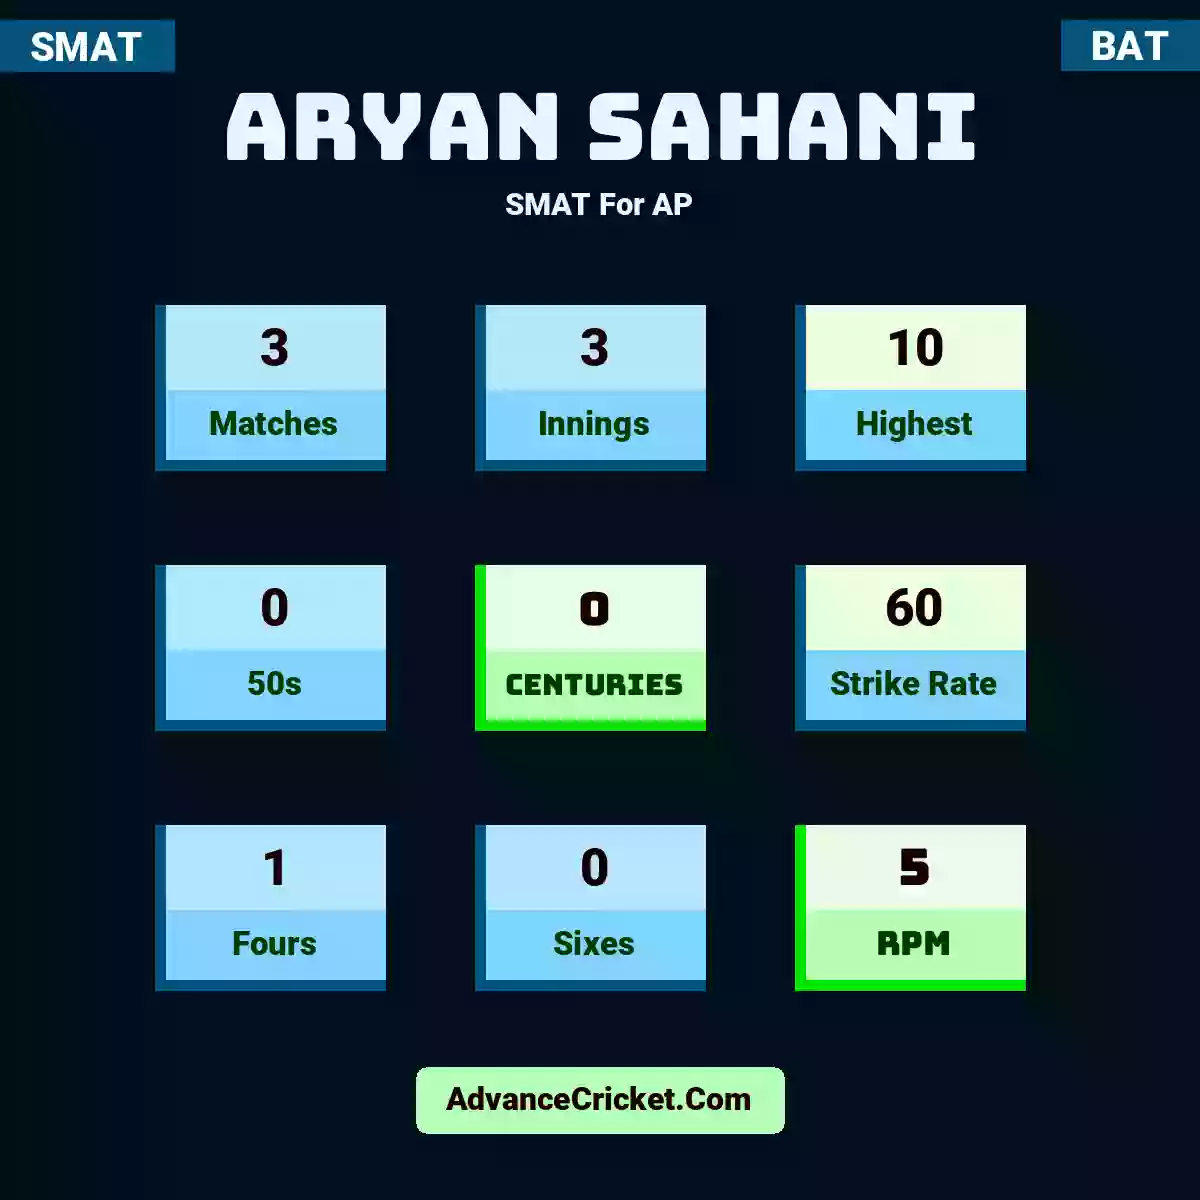 Aryan Sahani SMAT  For AP, Aryan Sahani played 3 matches, scored 10 runs as highest, 0 half-centuries, and 0 centuries, with a strike rate of 60. A.Sahani hit 1 fours and 0 sixes, with an RPM of 5.